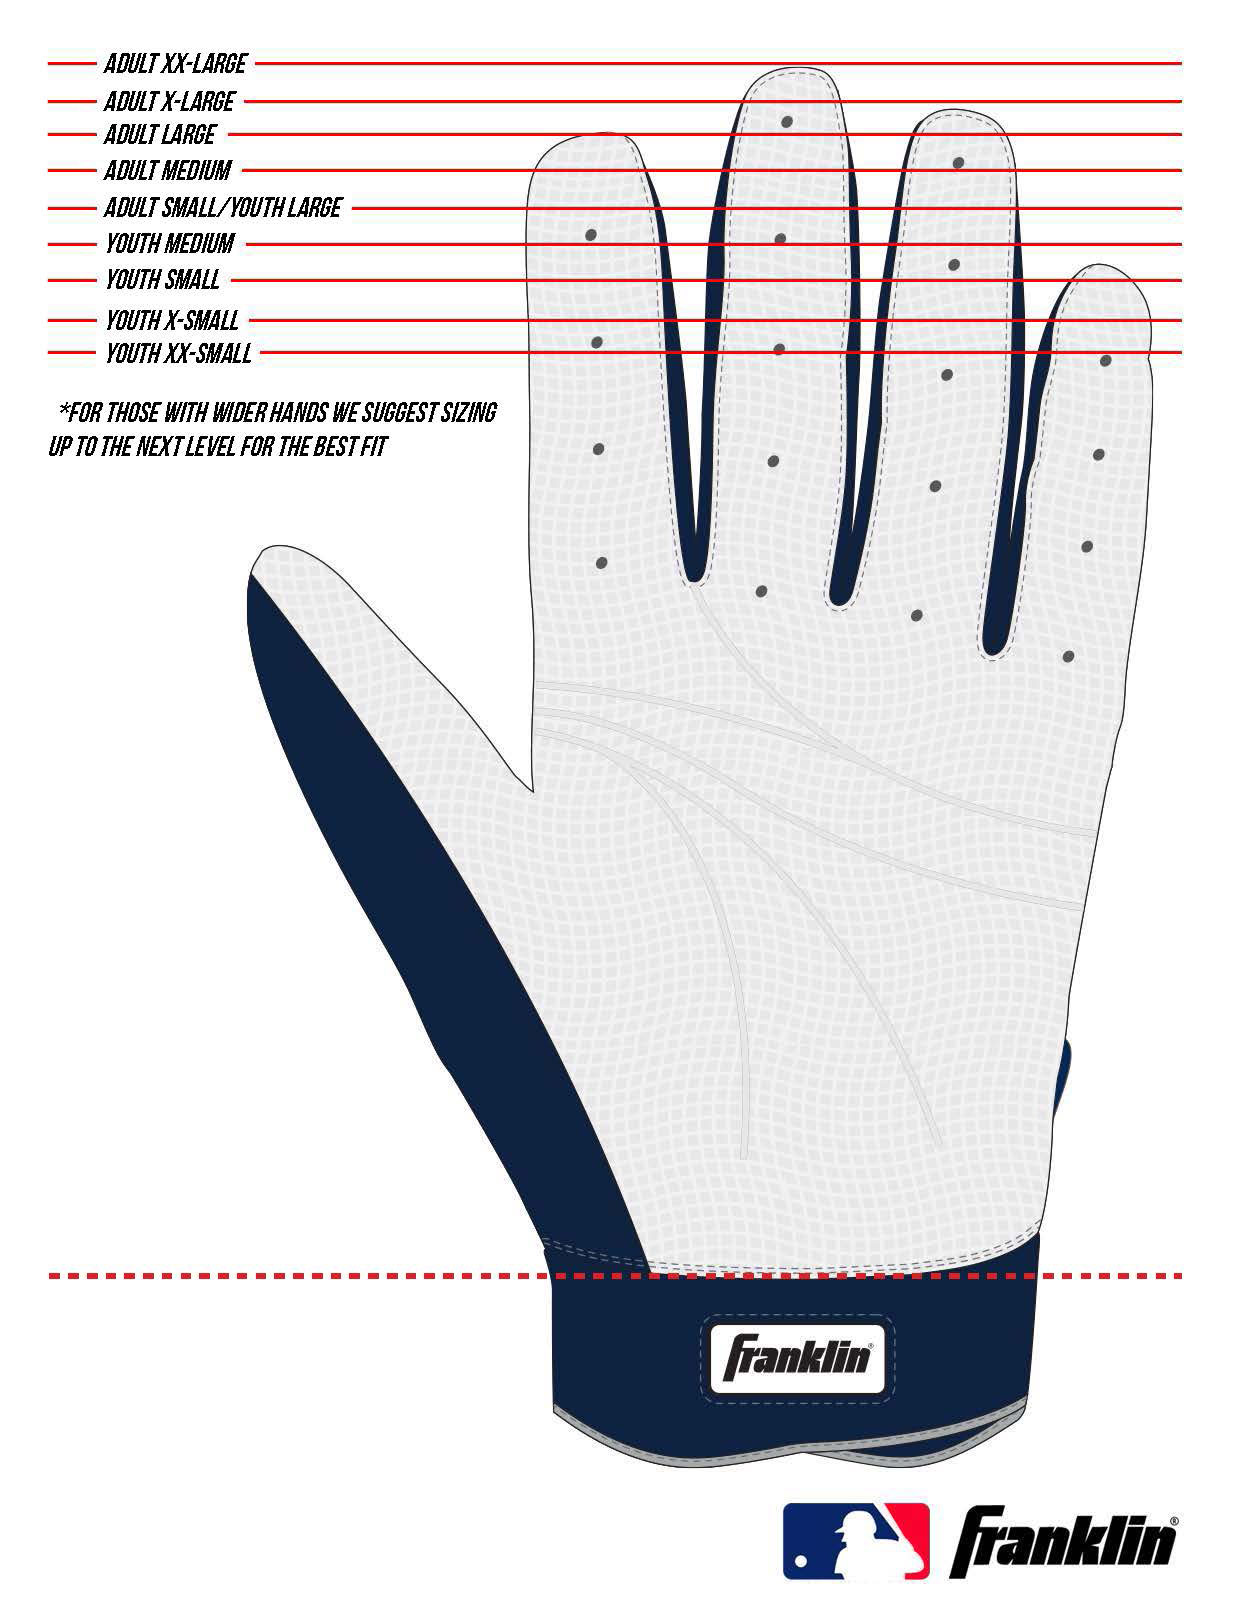 CHEAPBATS.COM : Franklin CFX Pro Amped Batting Glove - $26.95